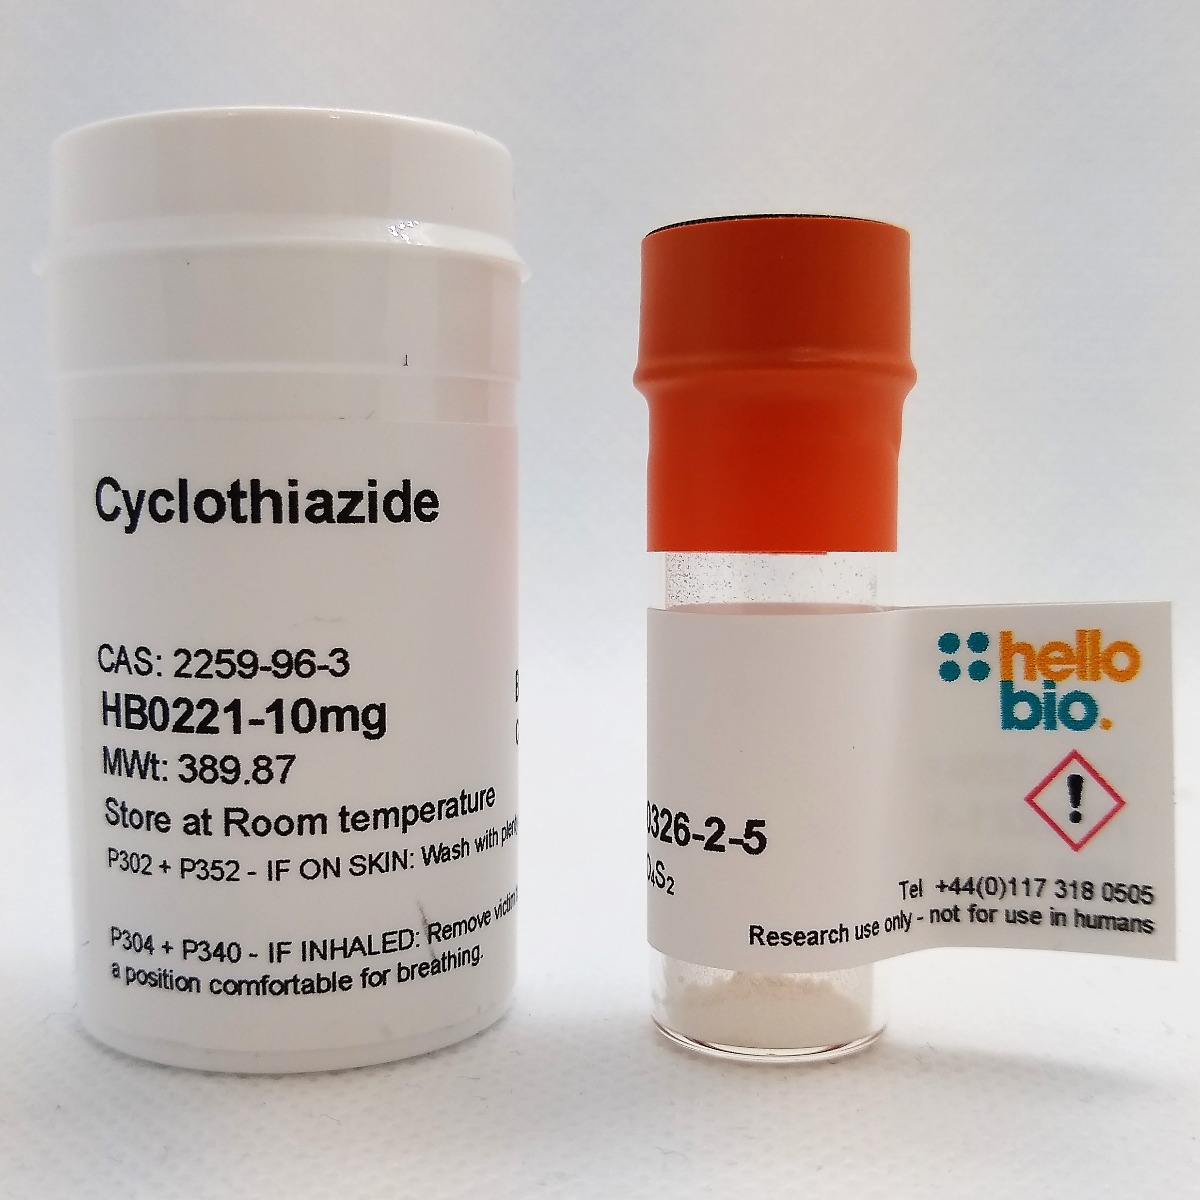 Cyclothiazide product vial image | Hello Bio